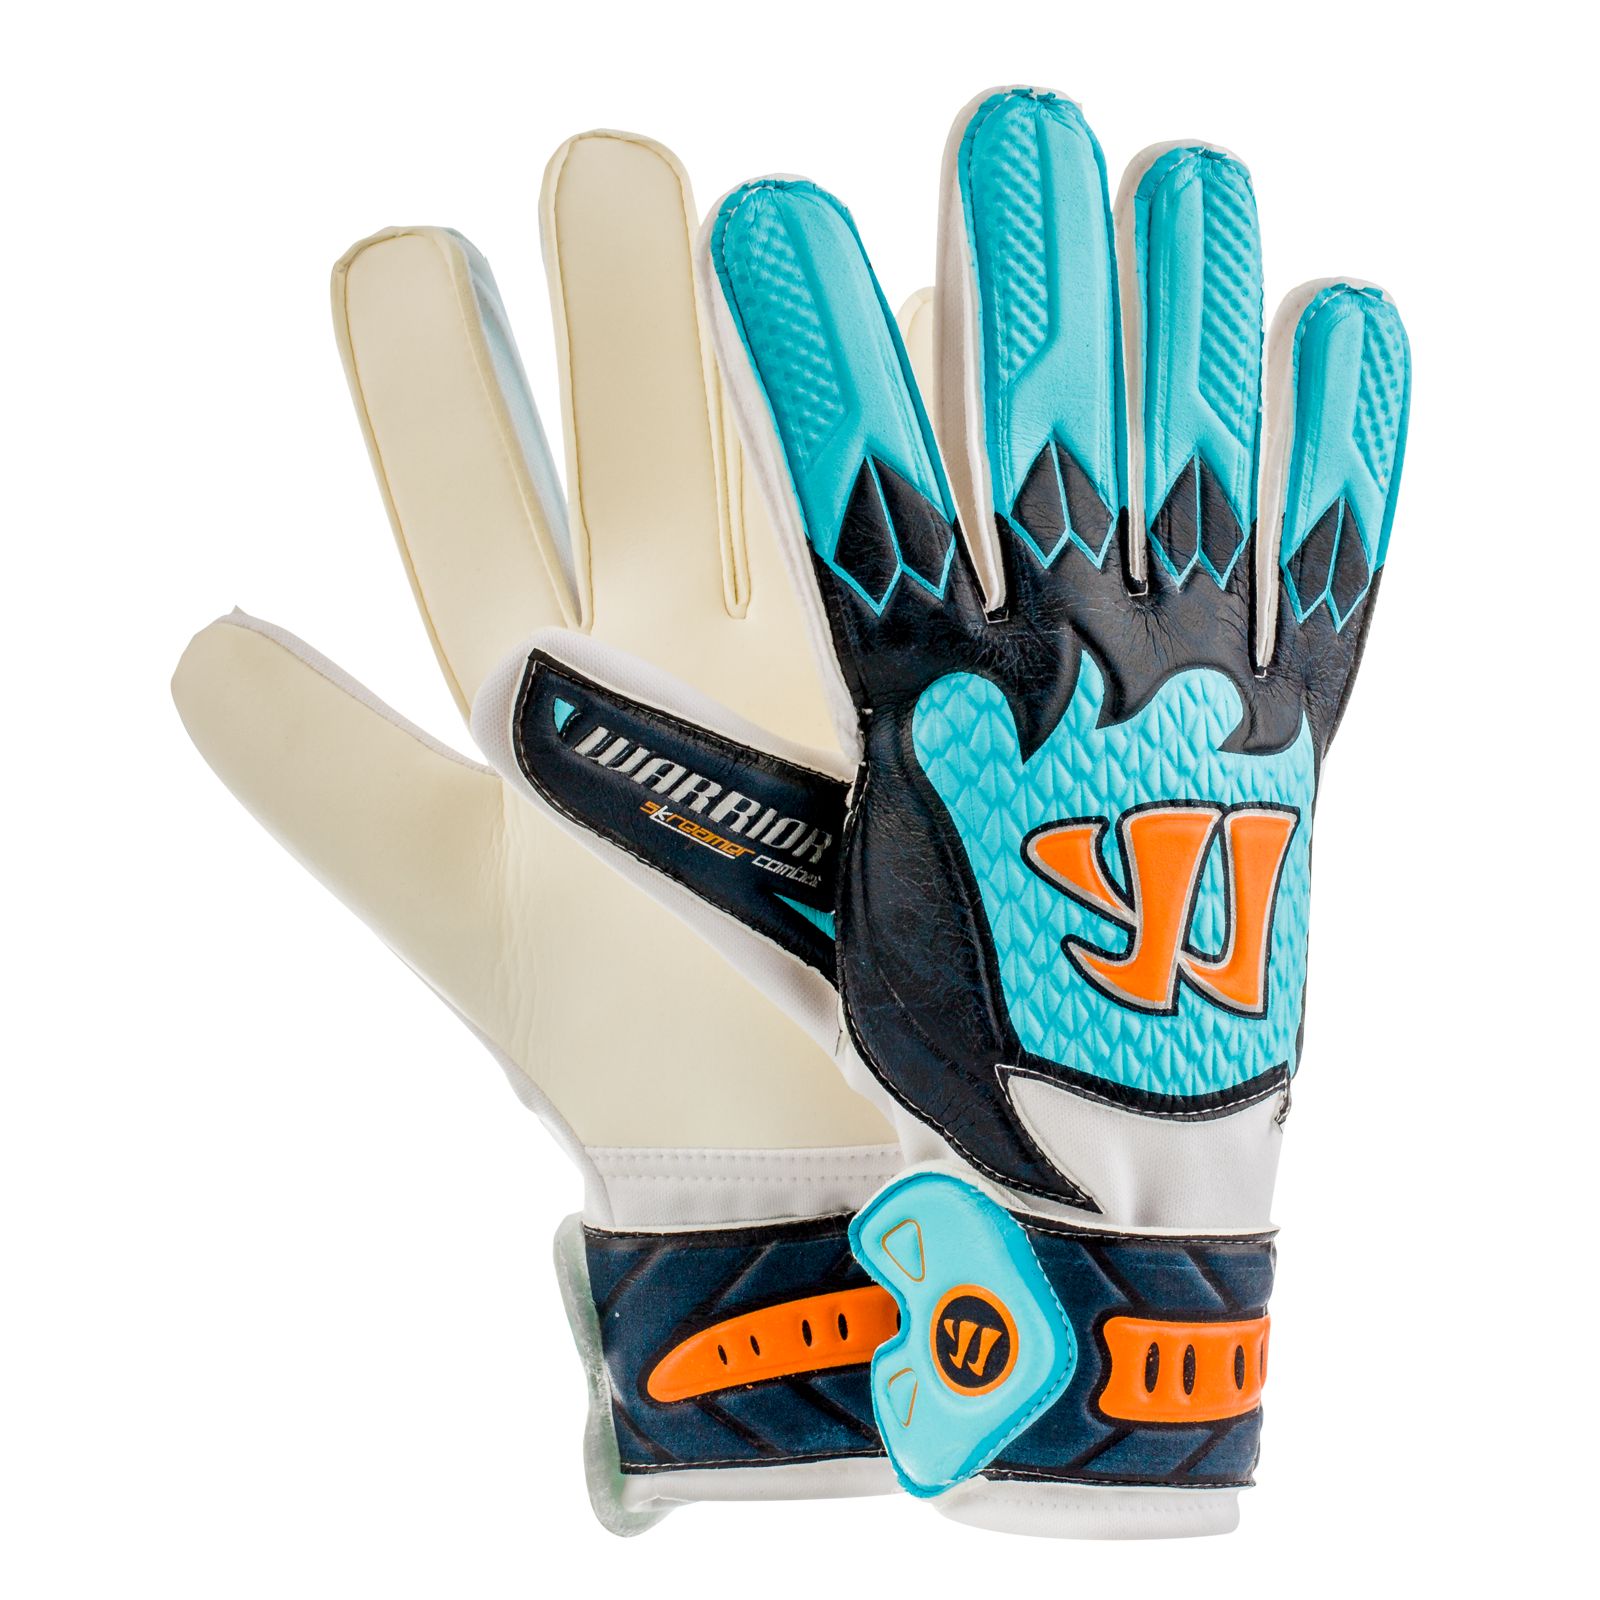 Skreamer Combat Goalkeeper Gloves, White with Blue Radiance & Insignia Blue image number 1